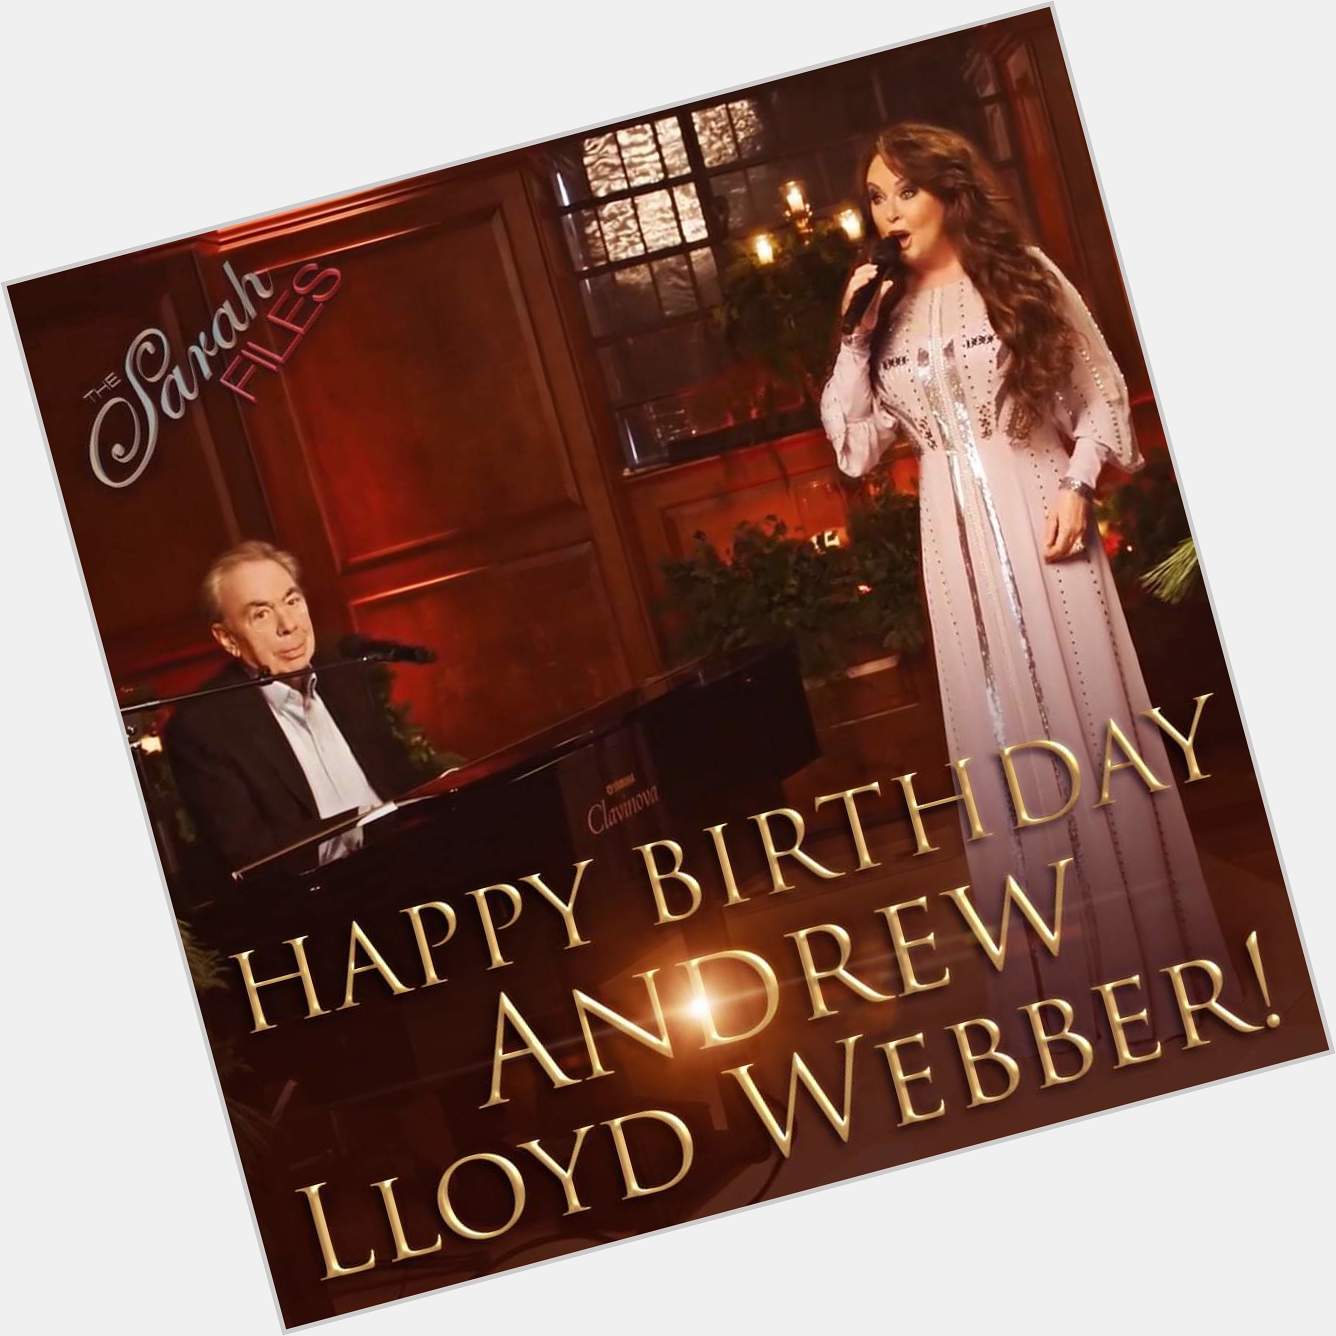   74th birthday Andrew Lloyd Webber!  